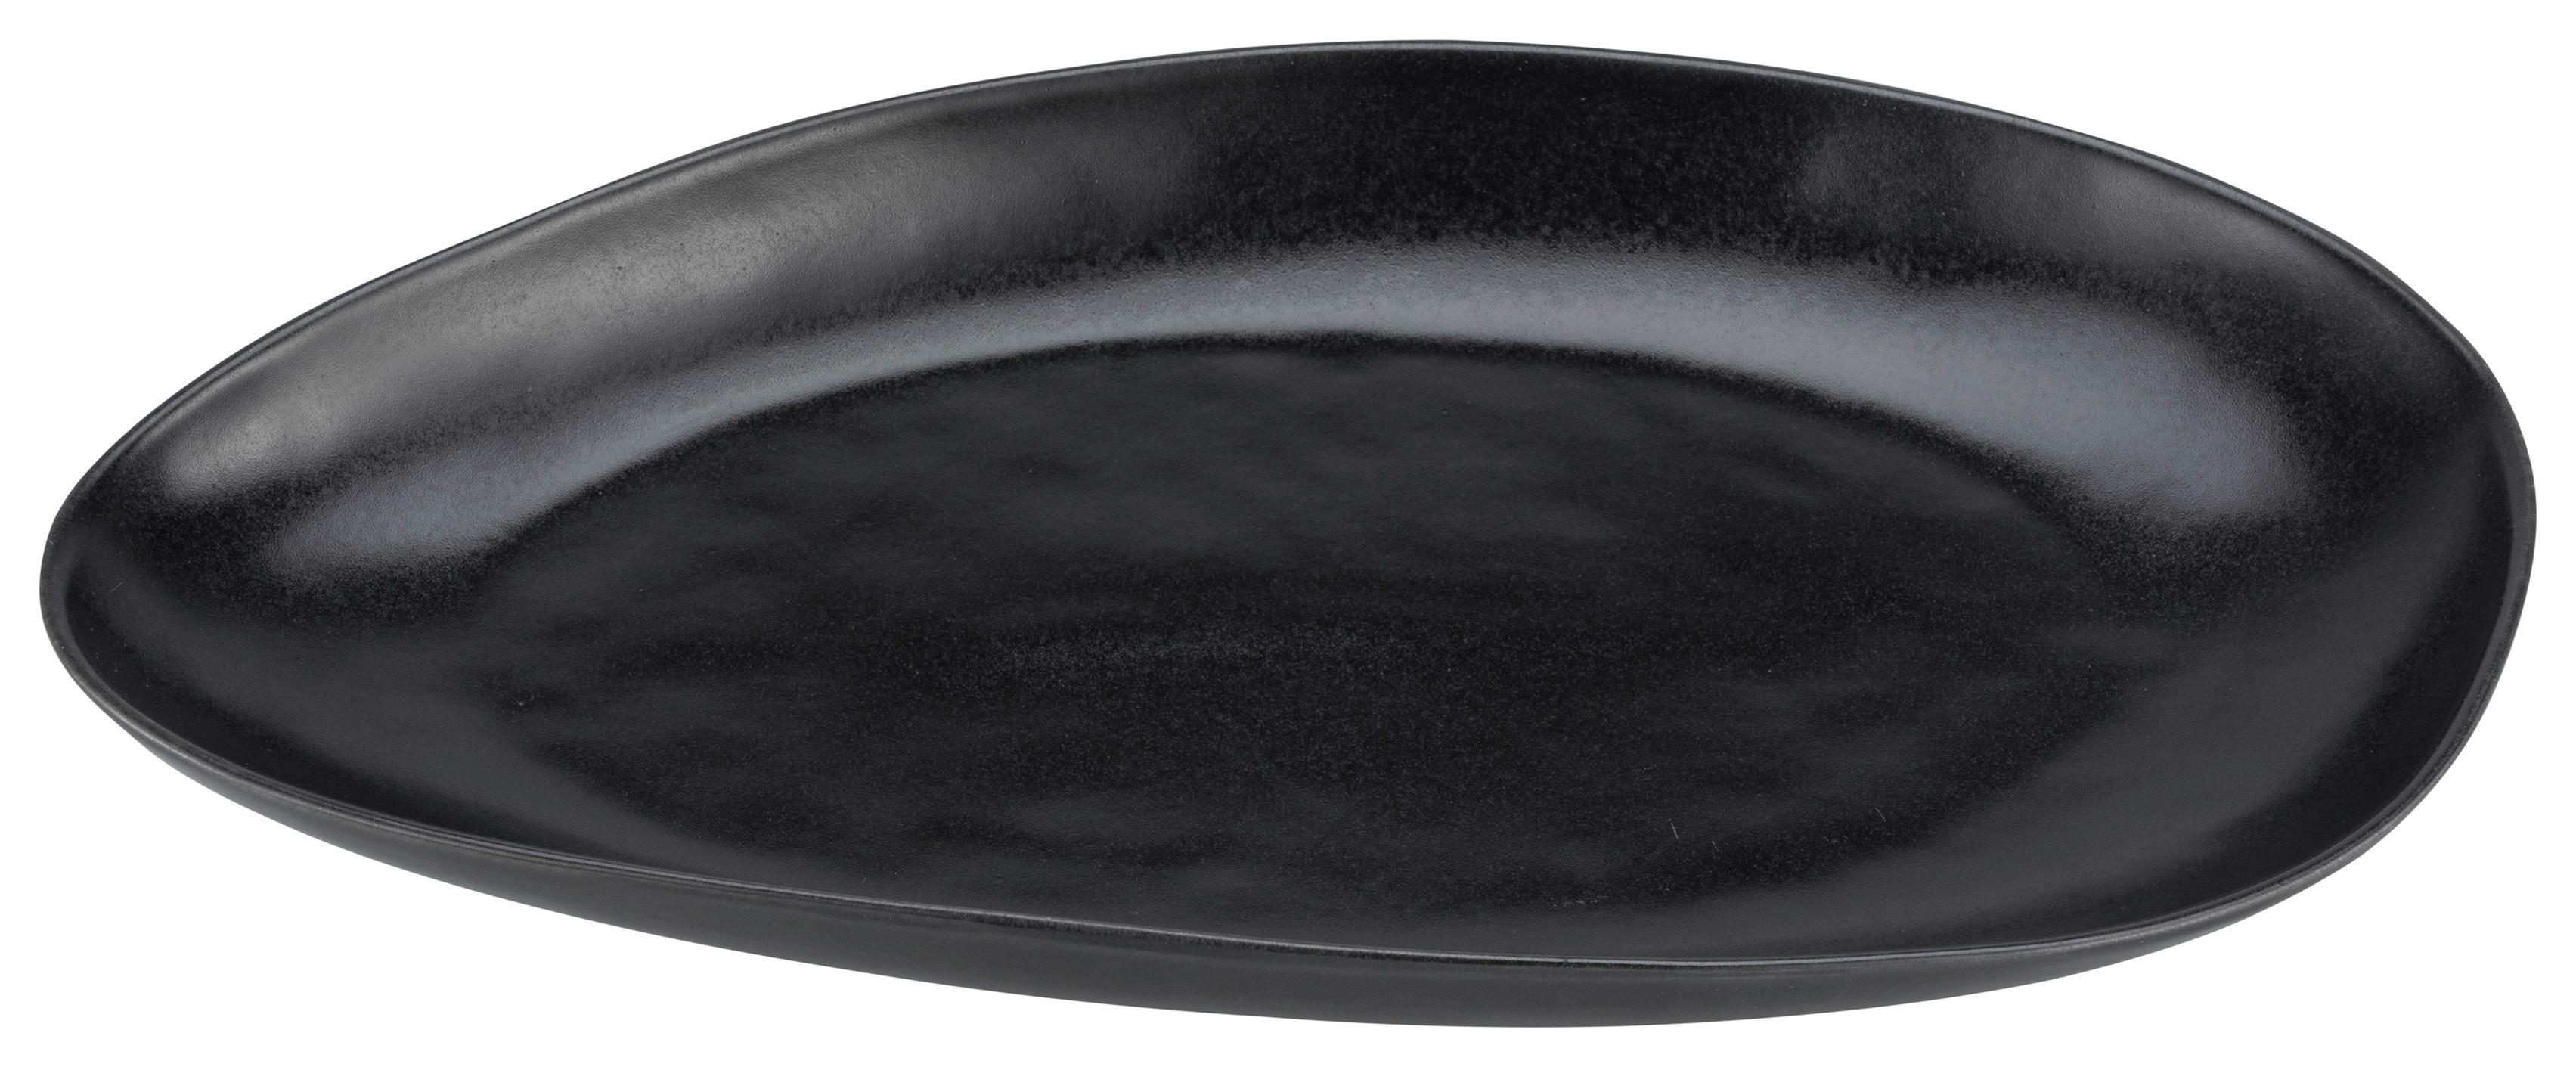 Servírovací Podnos Gourmet-Xl, Ø: 39cm - černá, Moderní, keramika (39/22/4cm) - Premium Living